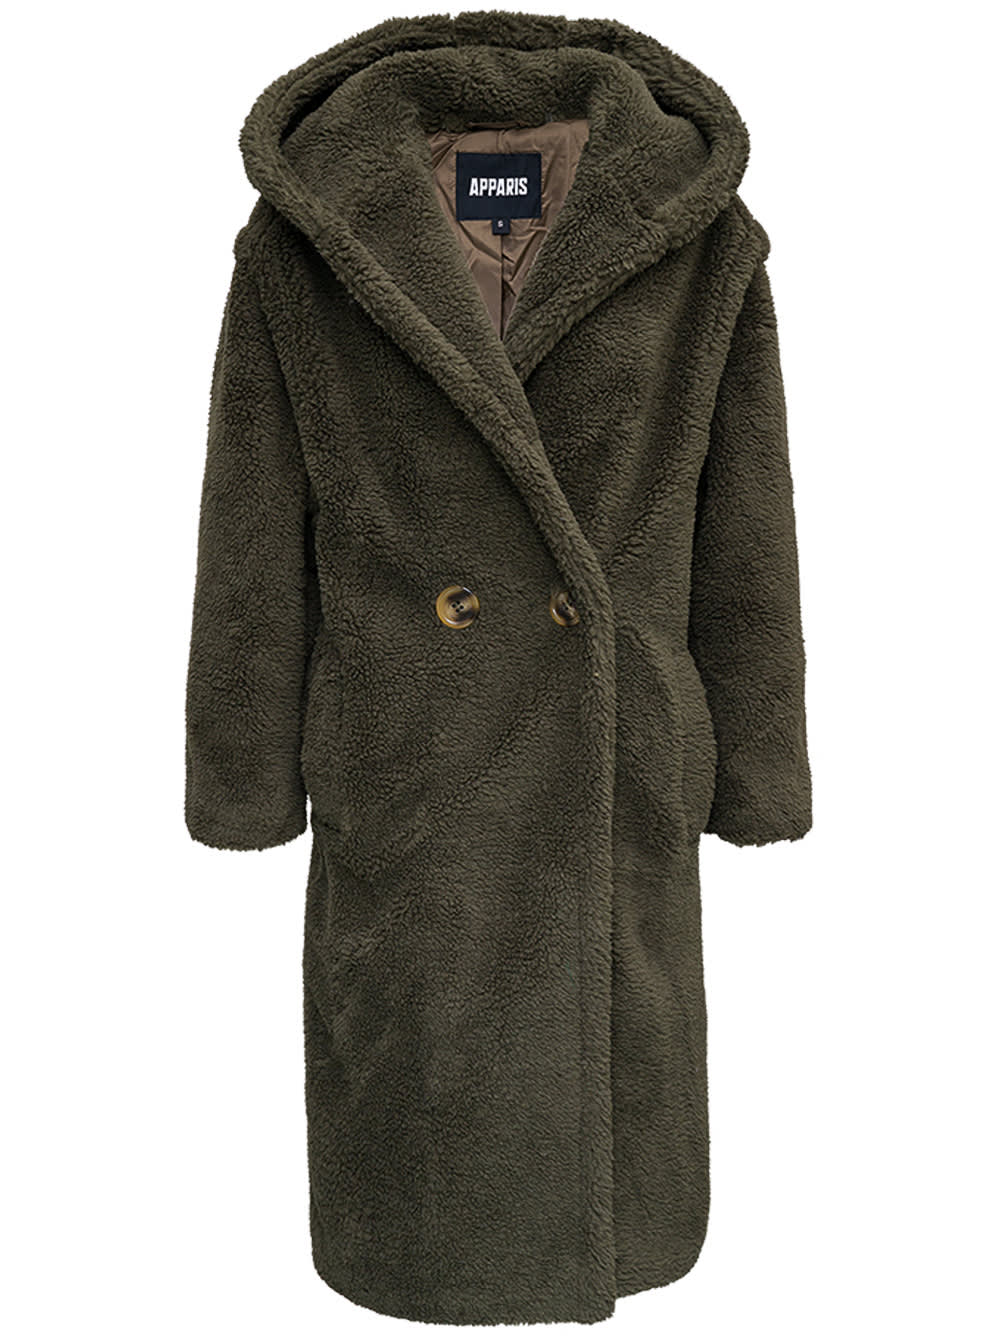 Apparis Mia Green Ecological Fur Coat